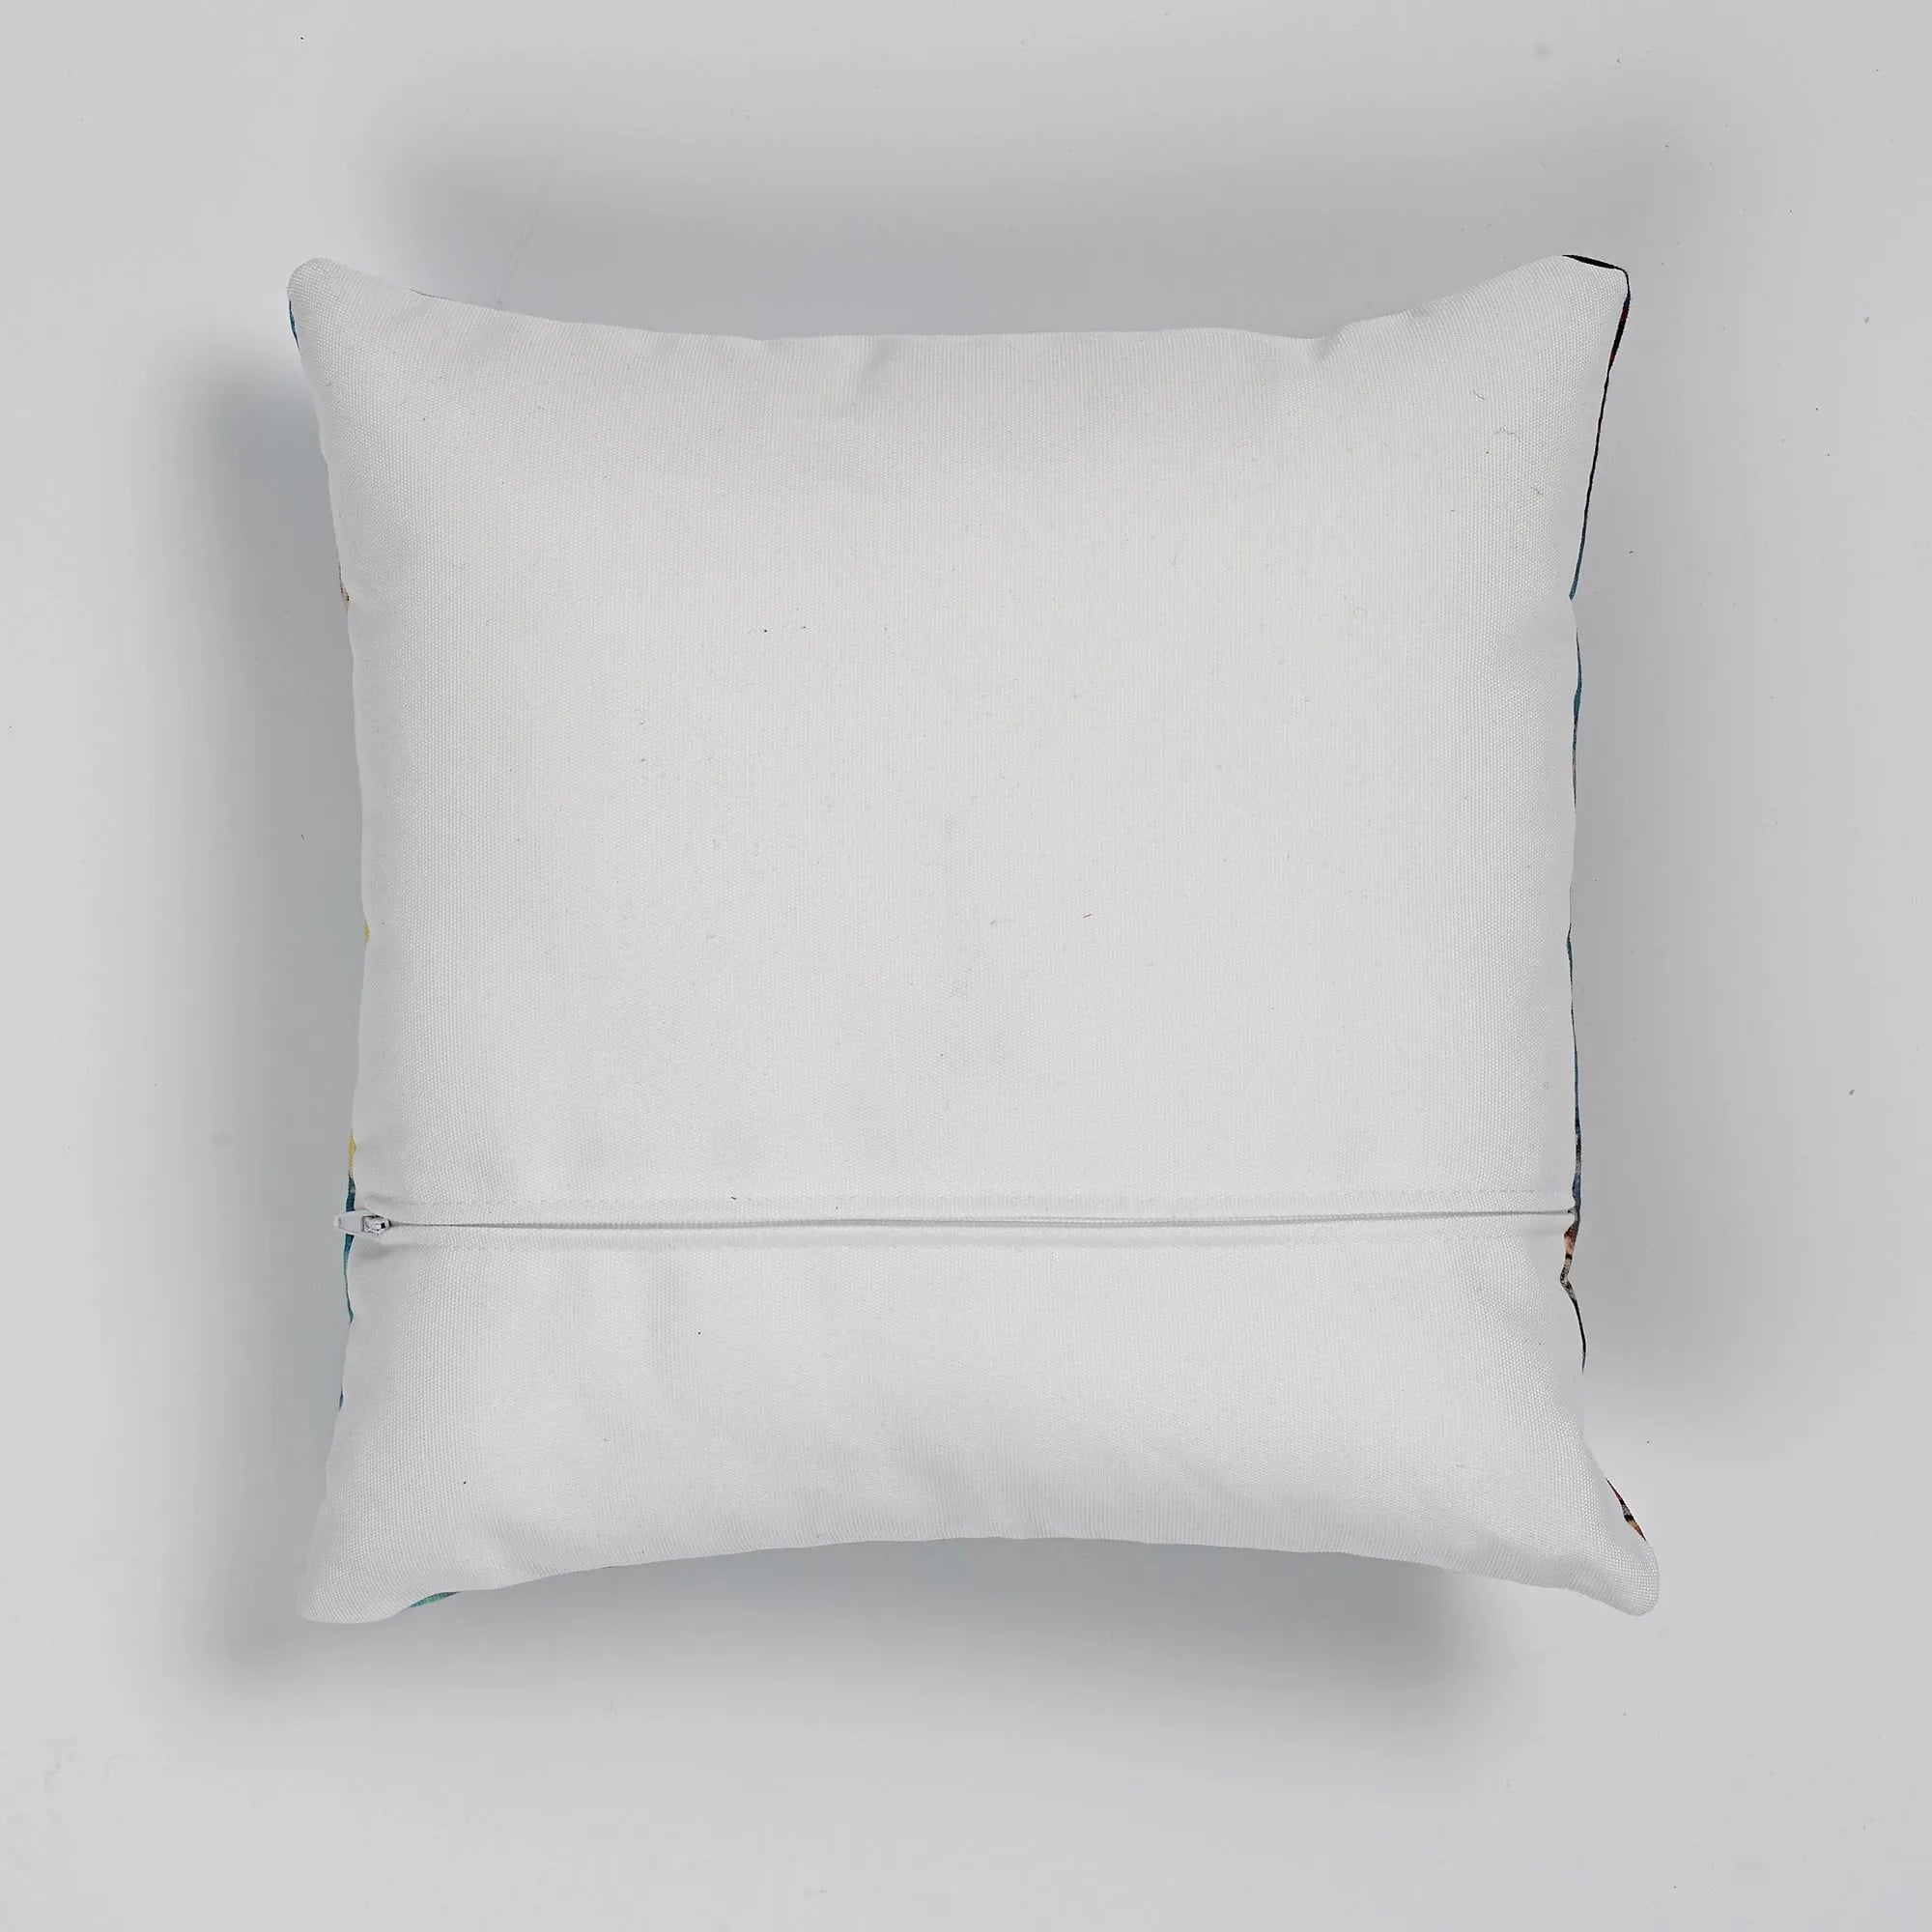 Man’s Best Friend Cushion - Decorative Throw Pillow - Throw Pillows - Aesthetic Art